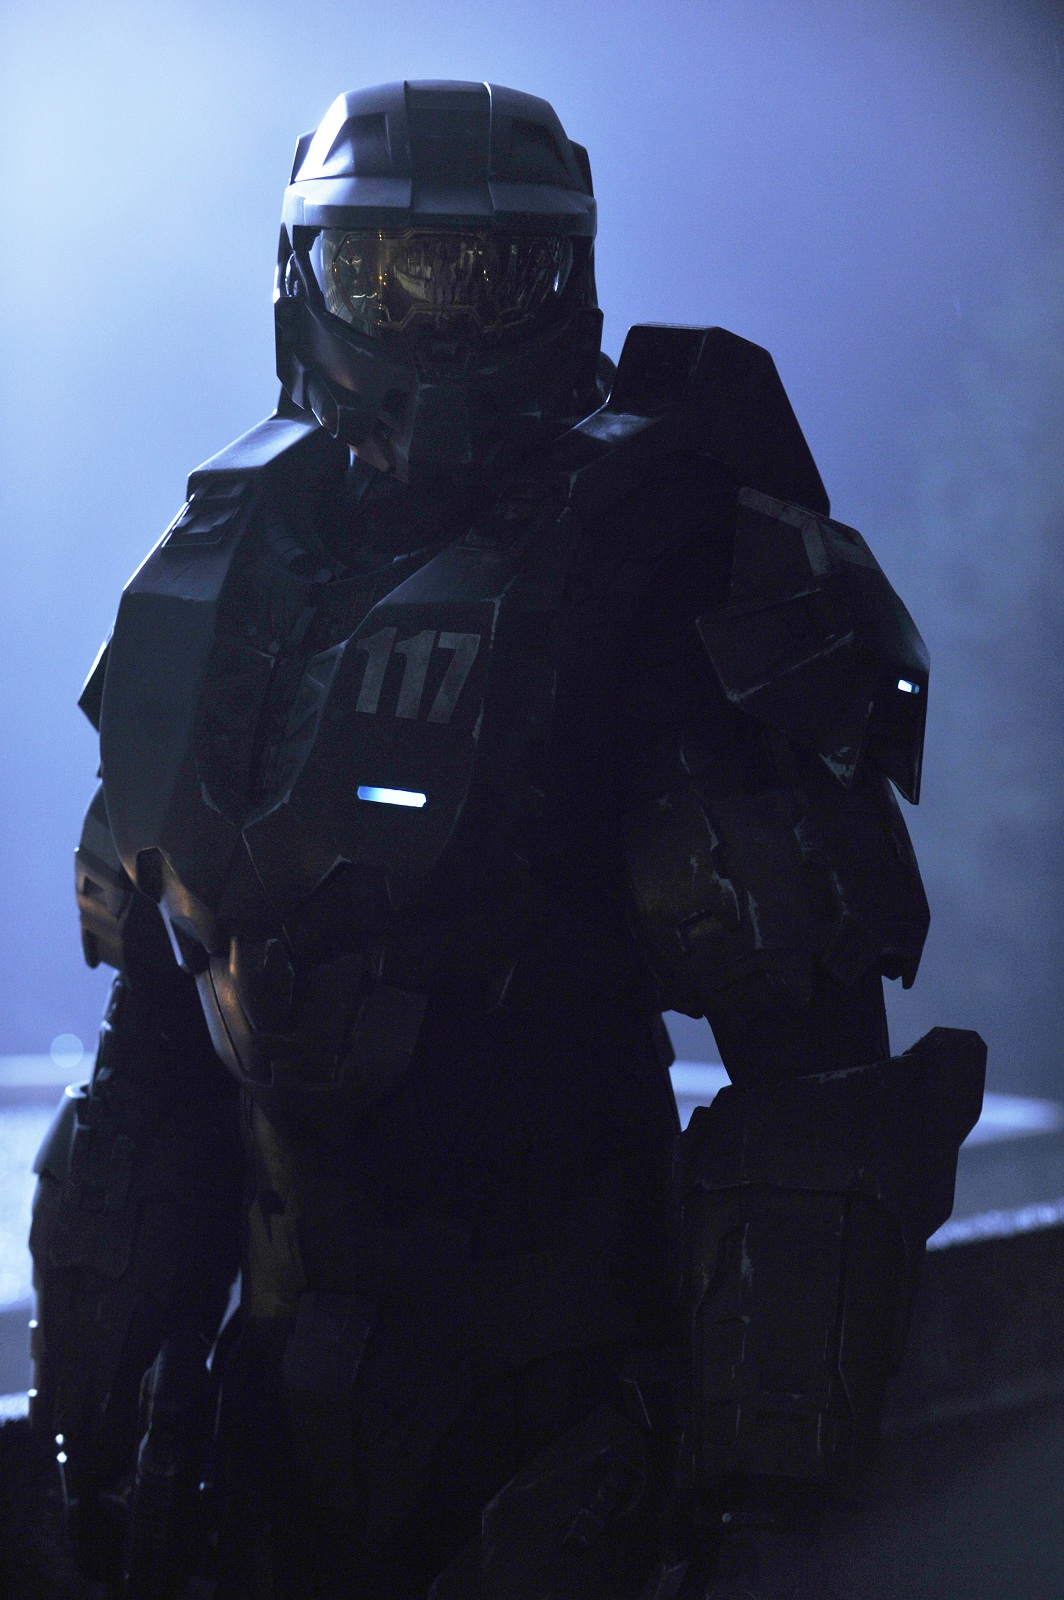 Halo 4: Forward Unto Dawn (TV Mini Series 2012) - IMDb